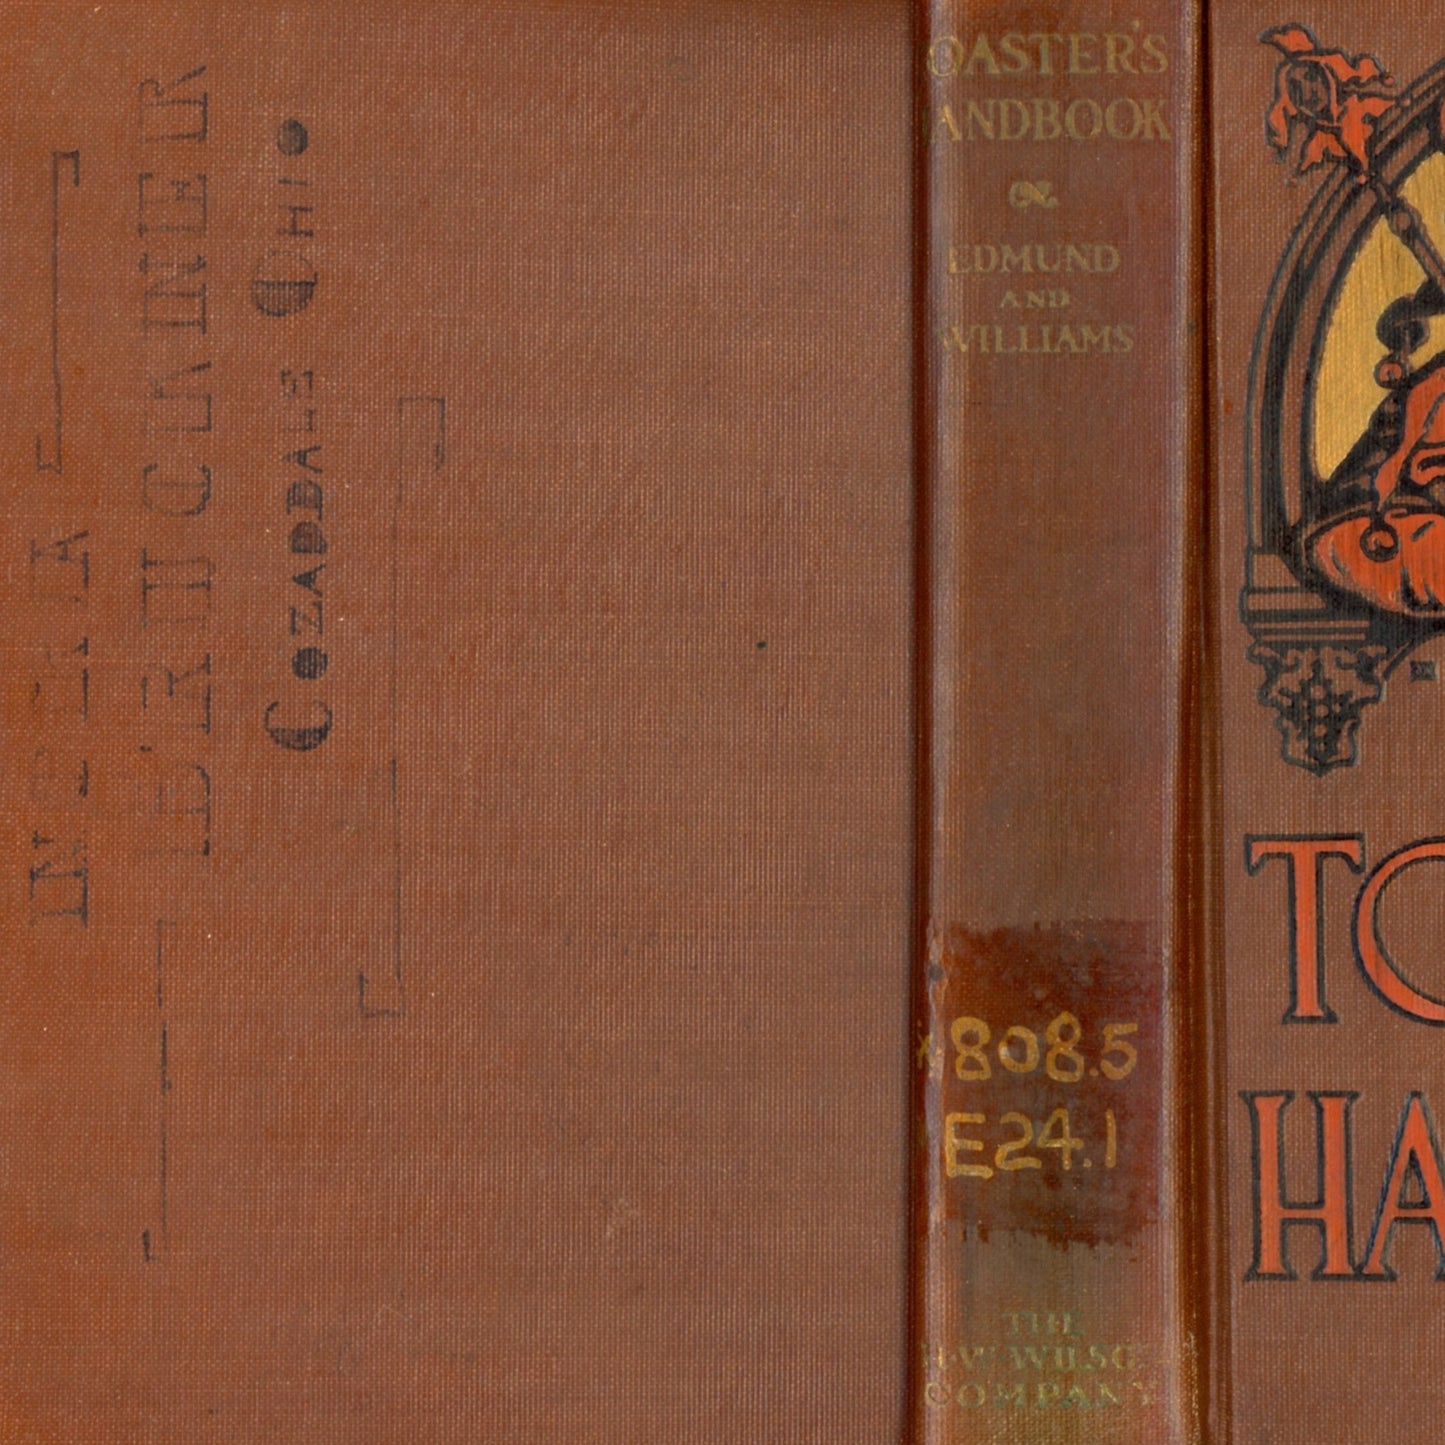 TOASTER'S HANDBOOK: Jokes, Stories & Quotations 1923 ©1916